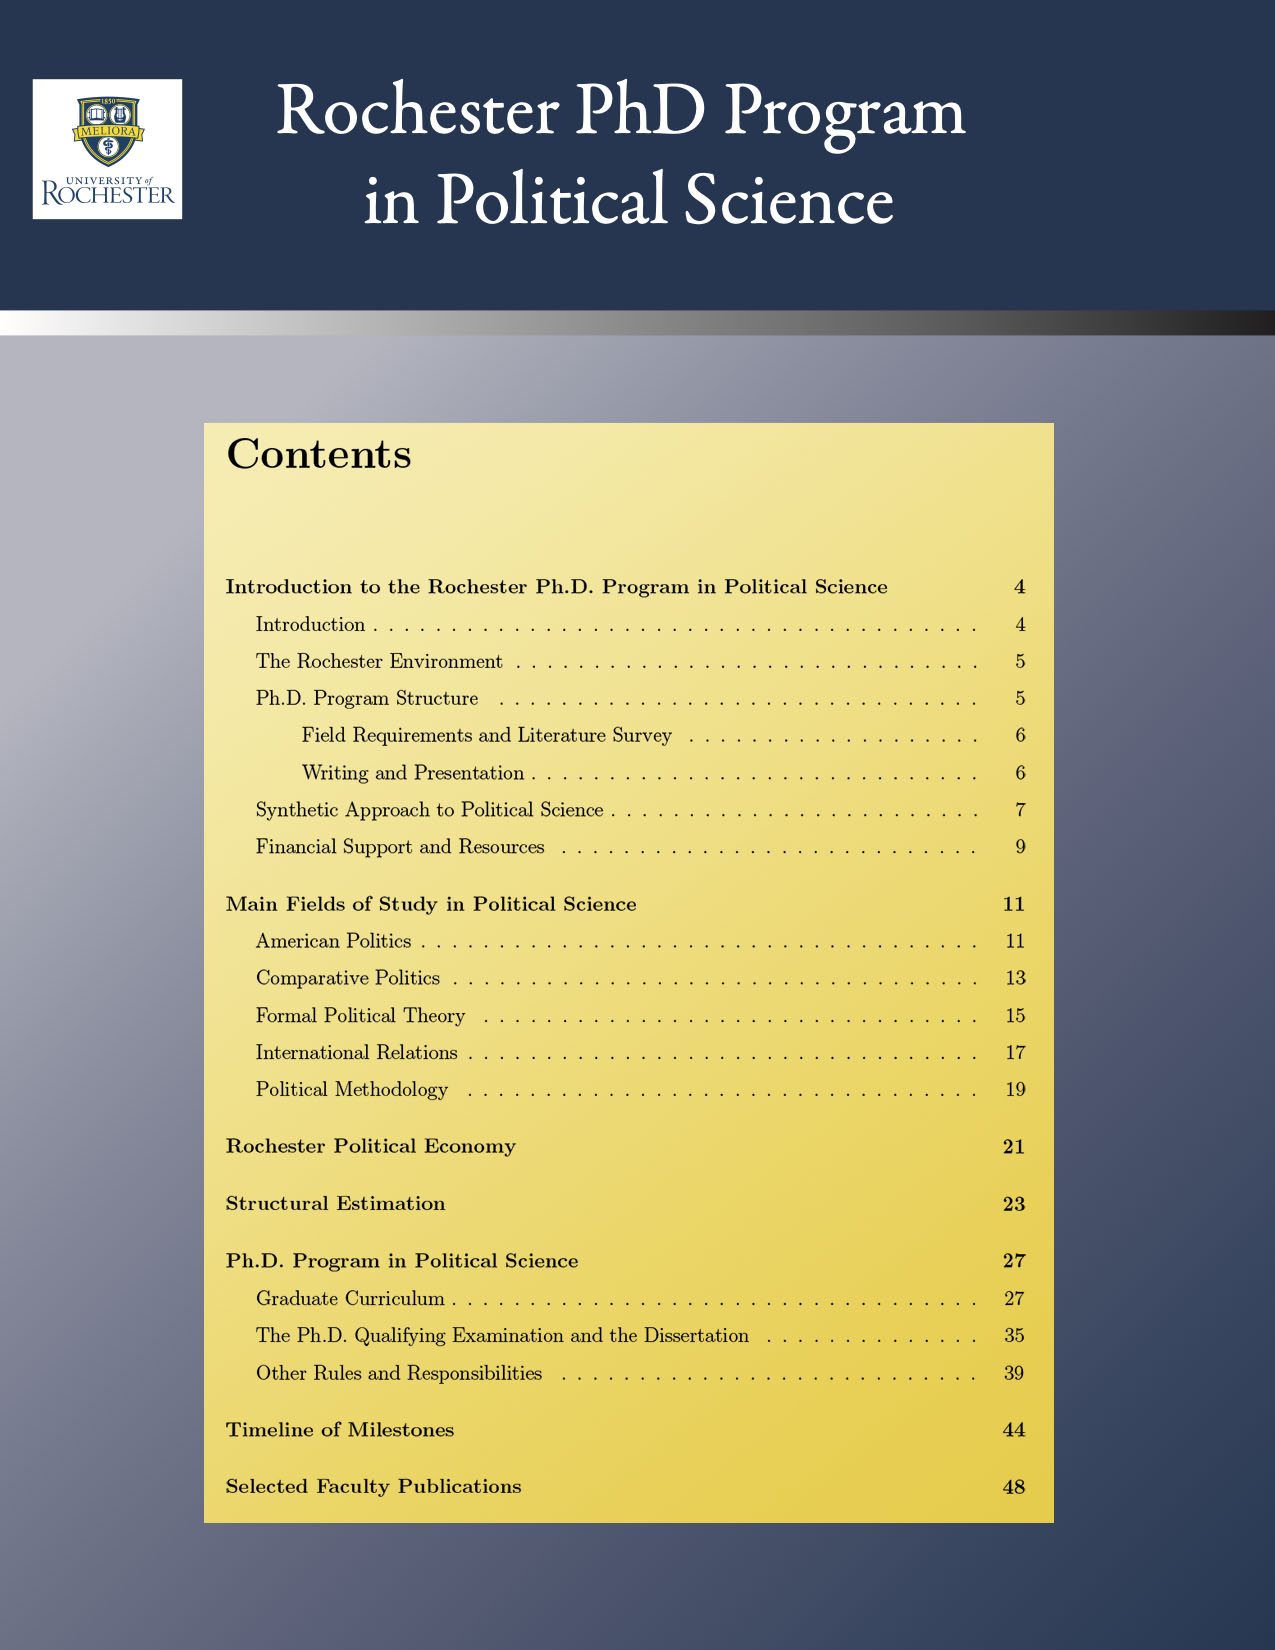 Cover of brochure for PhD program, link goes to PDF of full brochure.